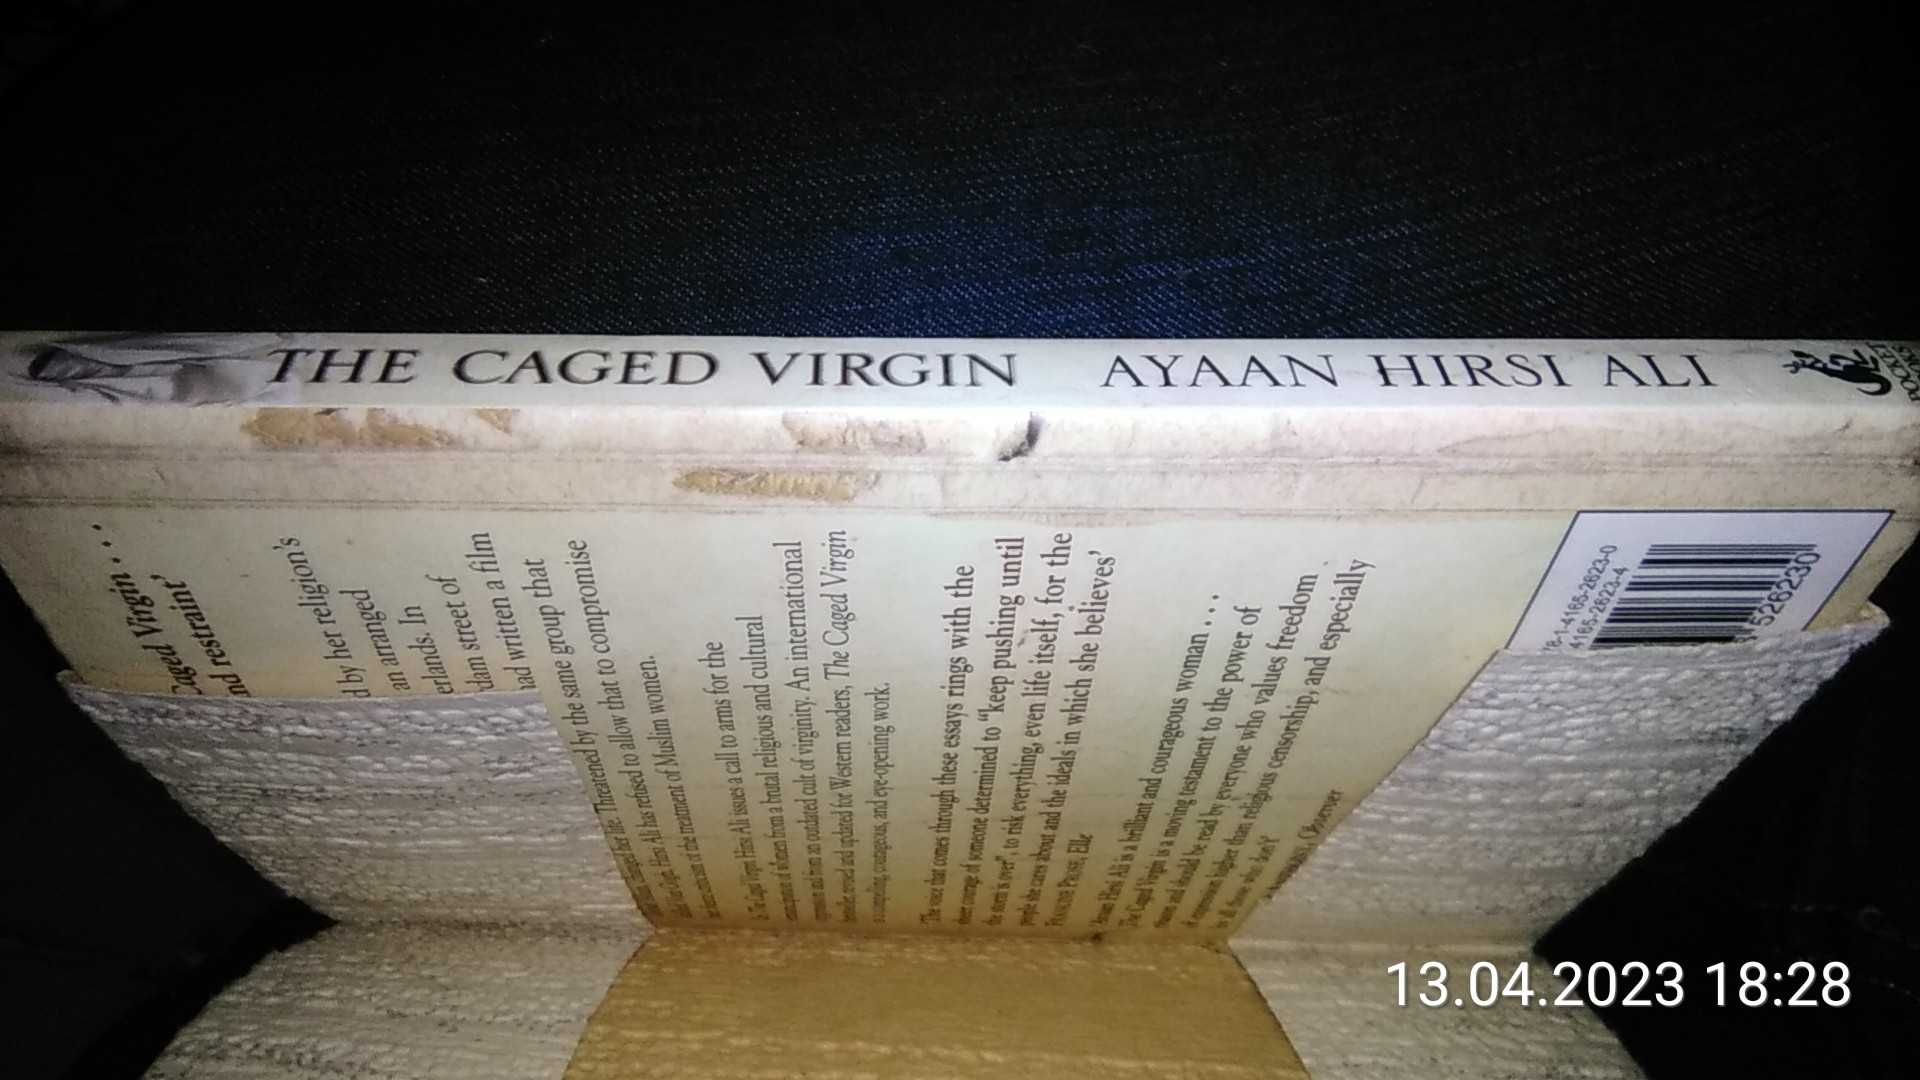 The Caged Virgin Ayaan Hirsi Ali